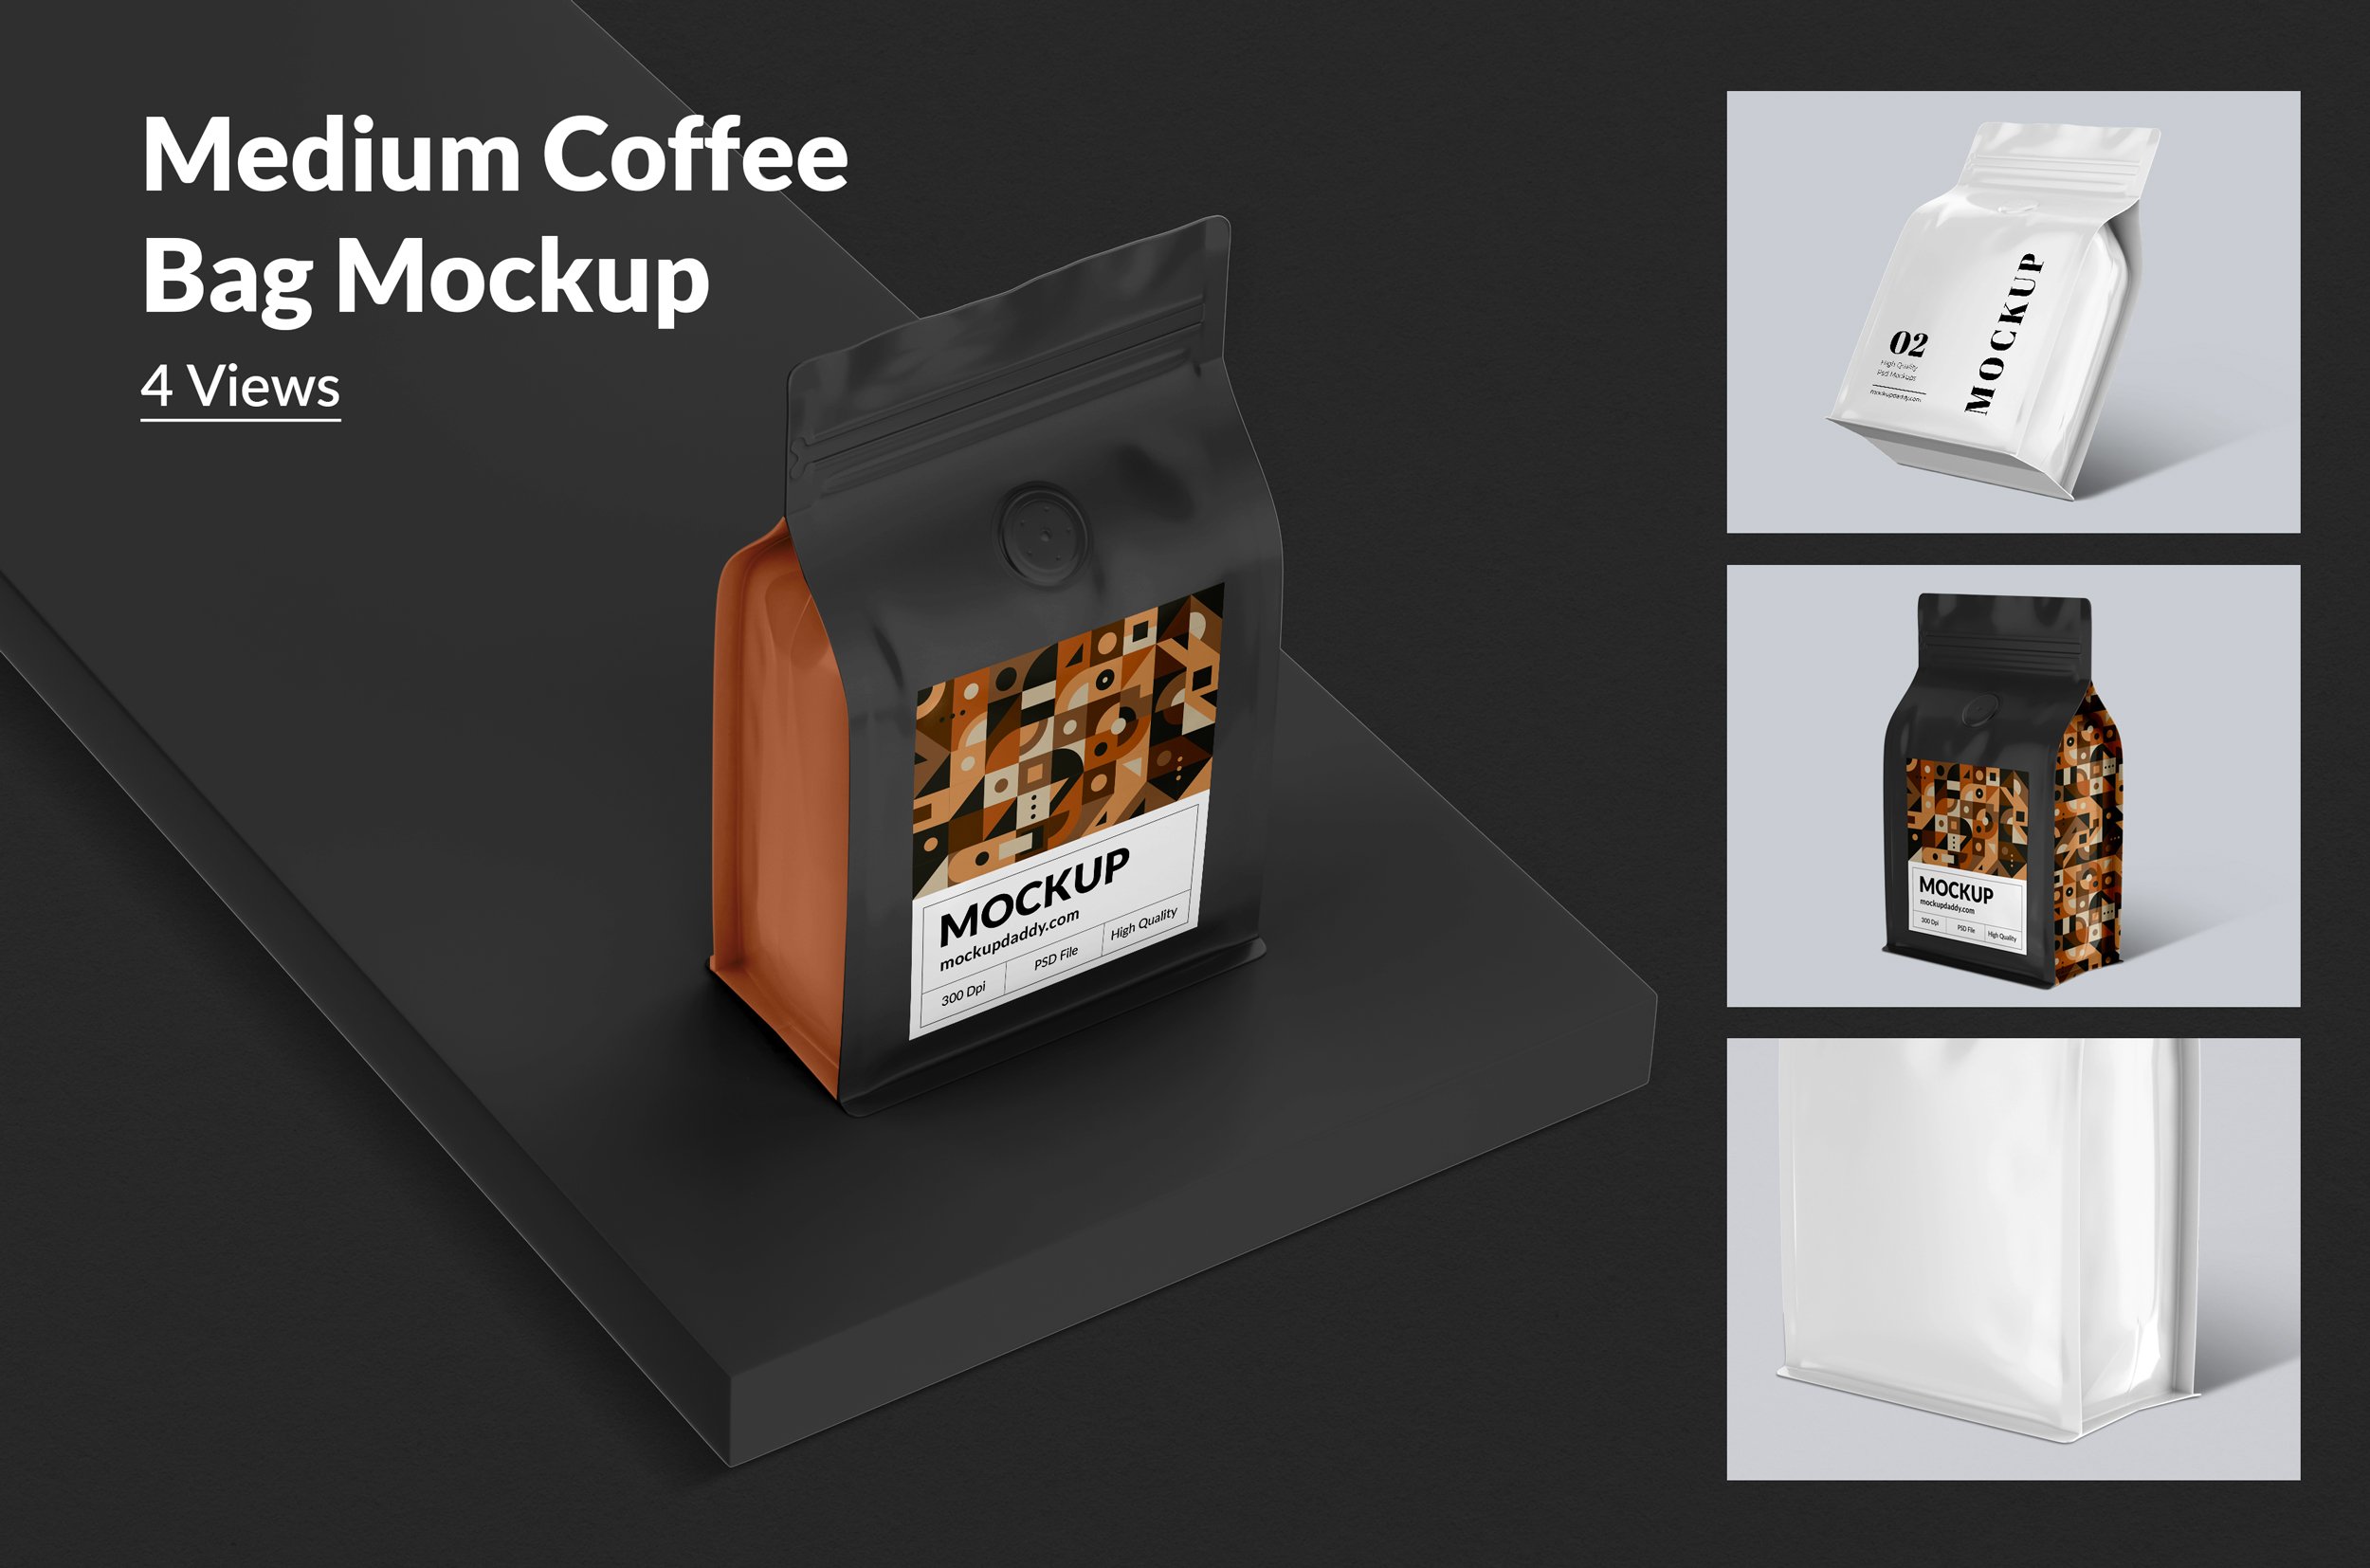 Coffee Bag Mockup (Medium Size) cover image.